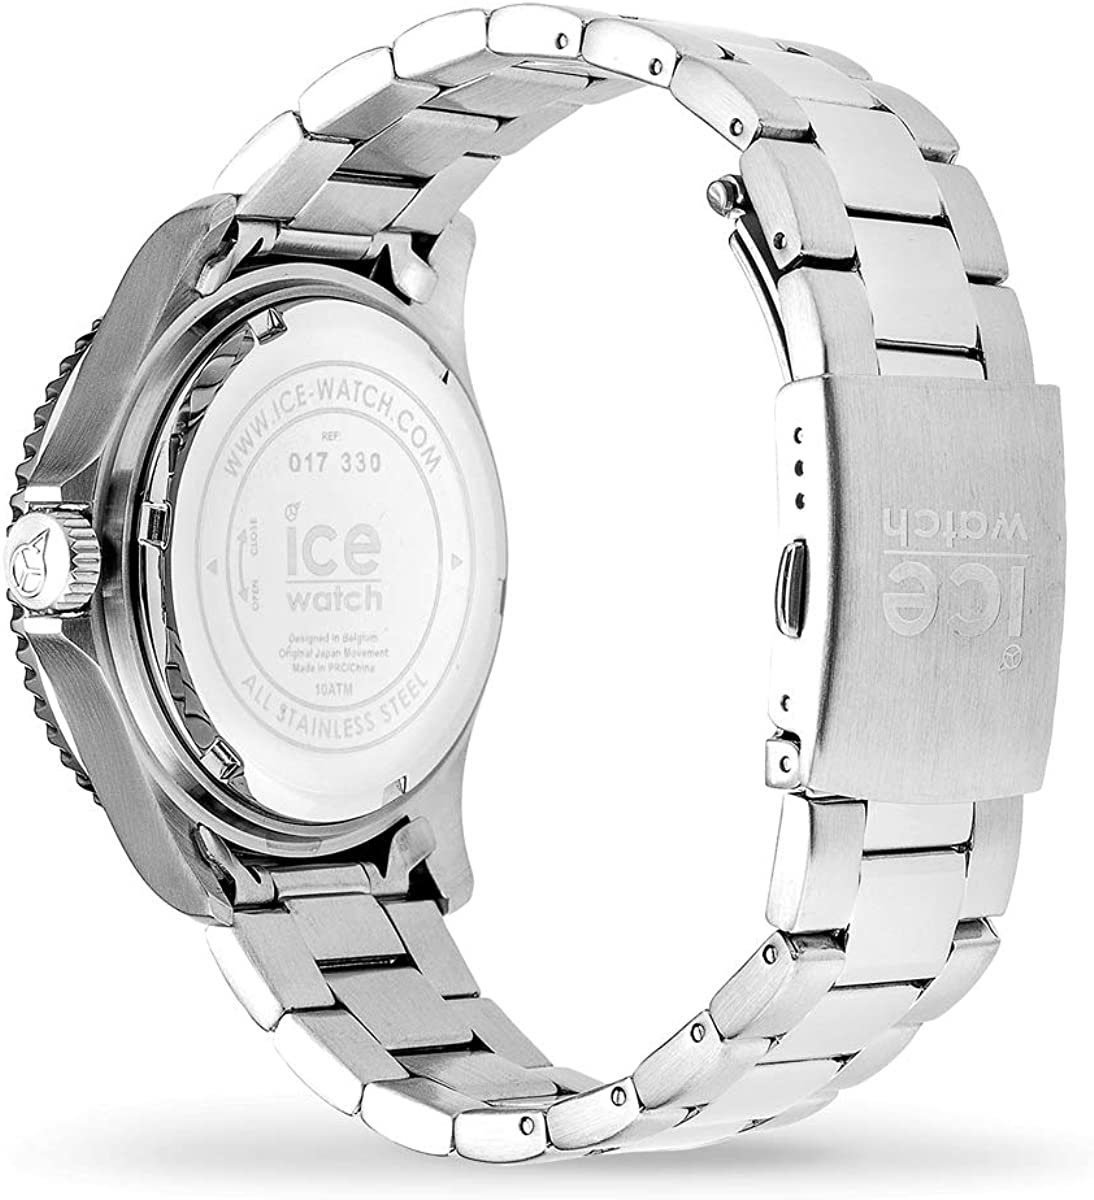 017330 Quarzuhr ice-watch